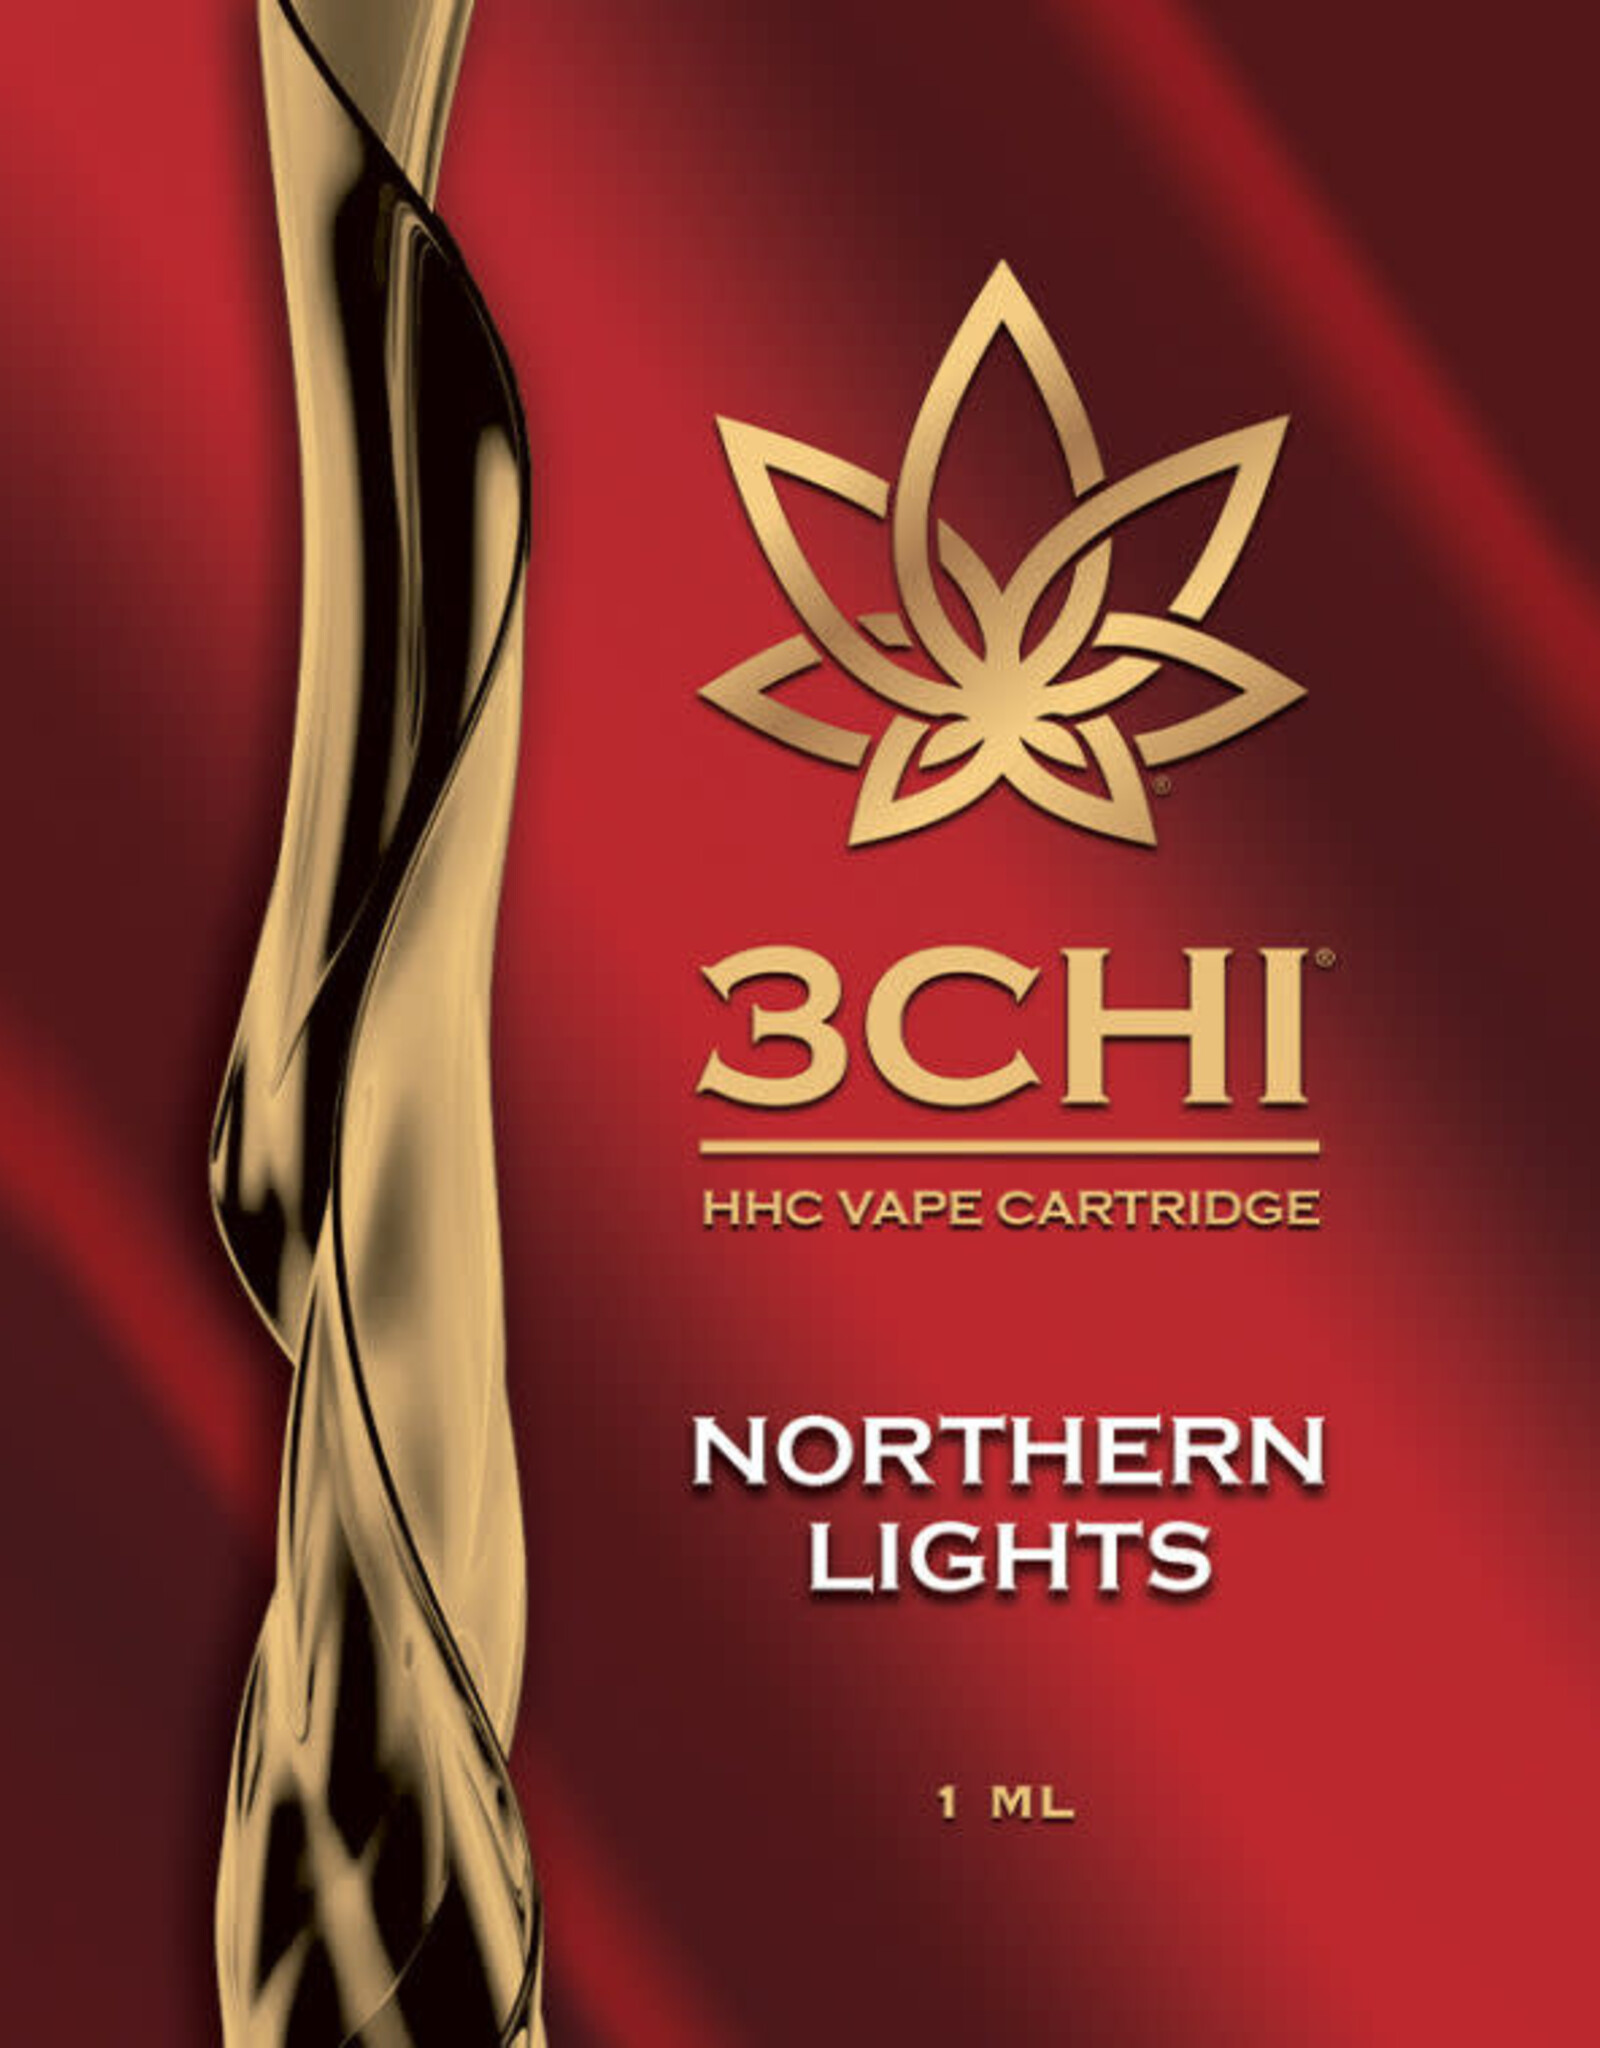 3CHI 3CHI HHC Vape Cartridge- Northern lights